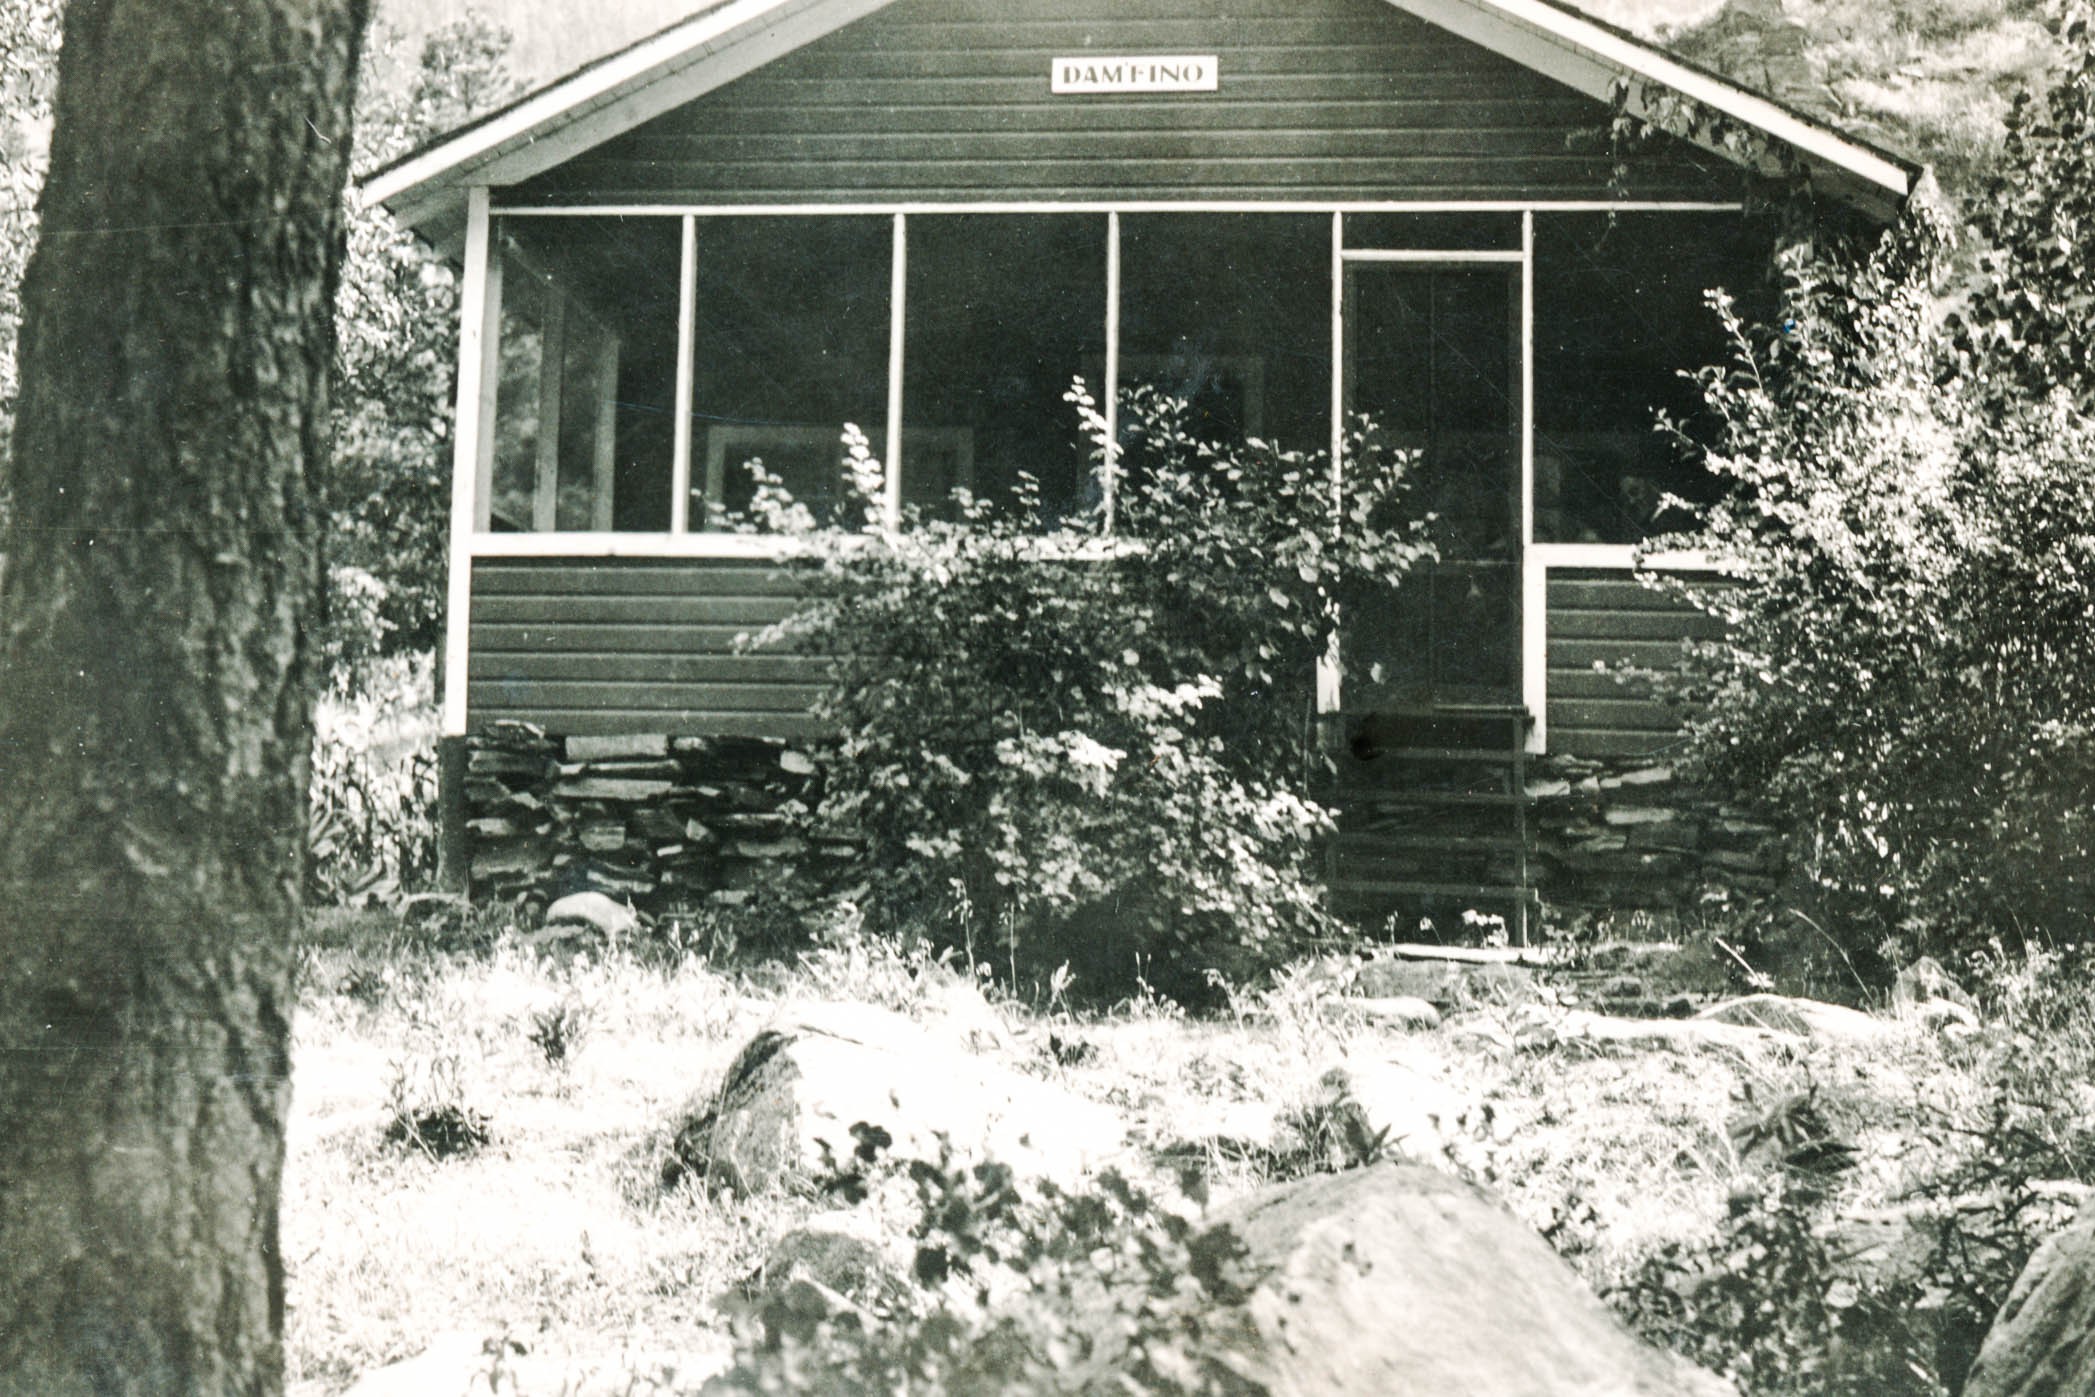 Idlewild Lodge - idlewildlodge.github.io - Circa 1930 - DAMFINO Facade